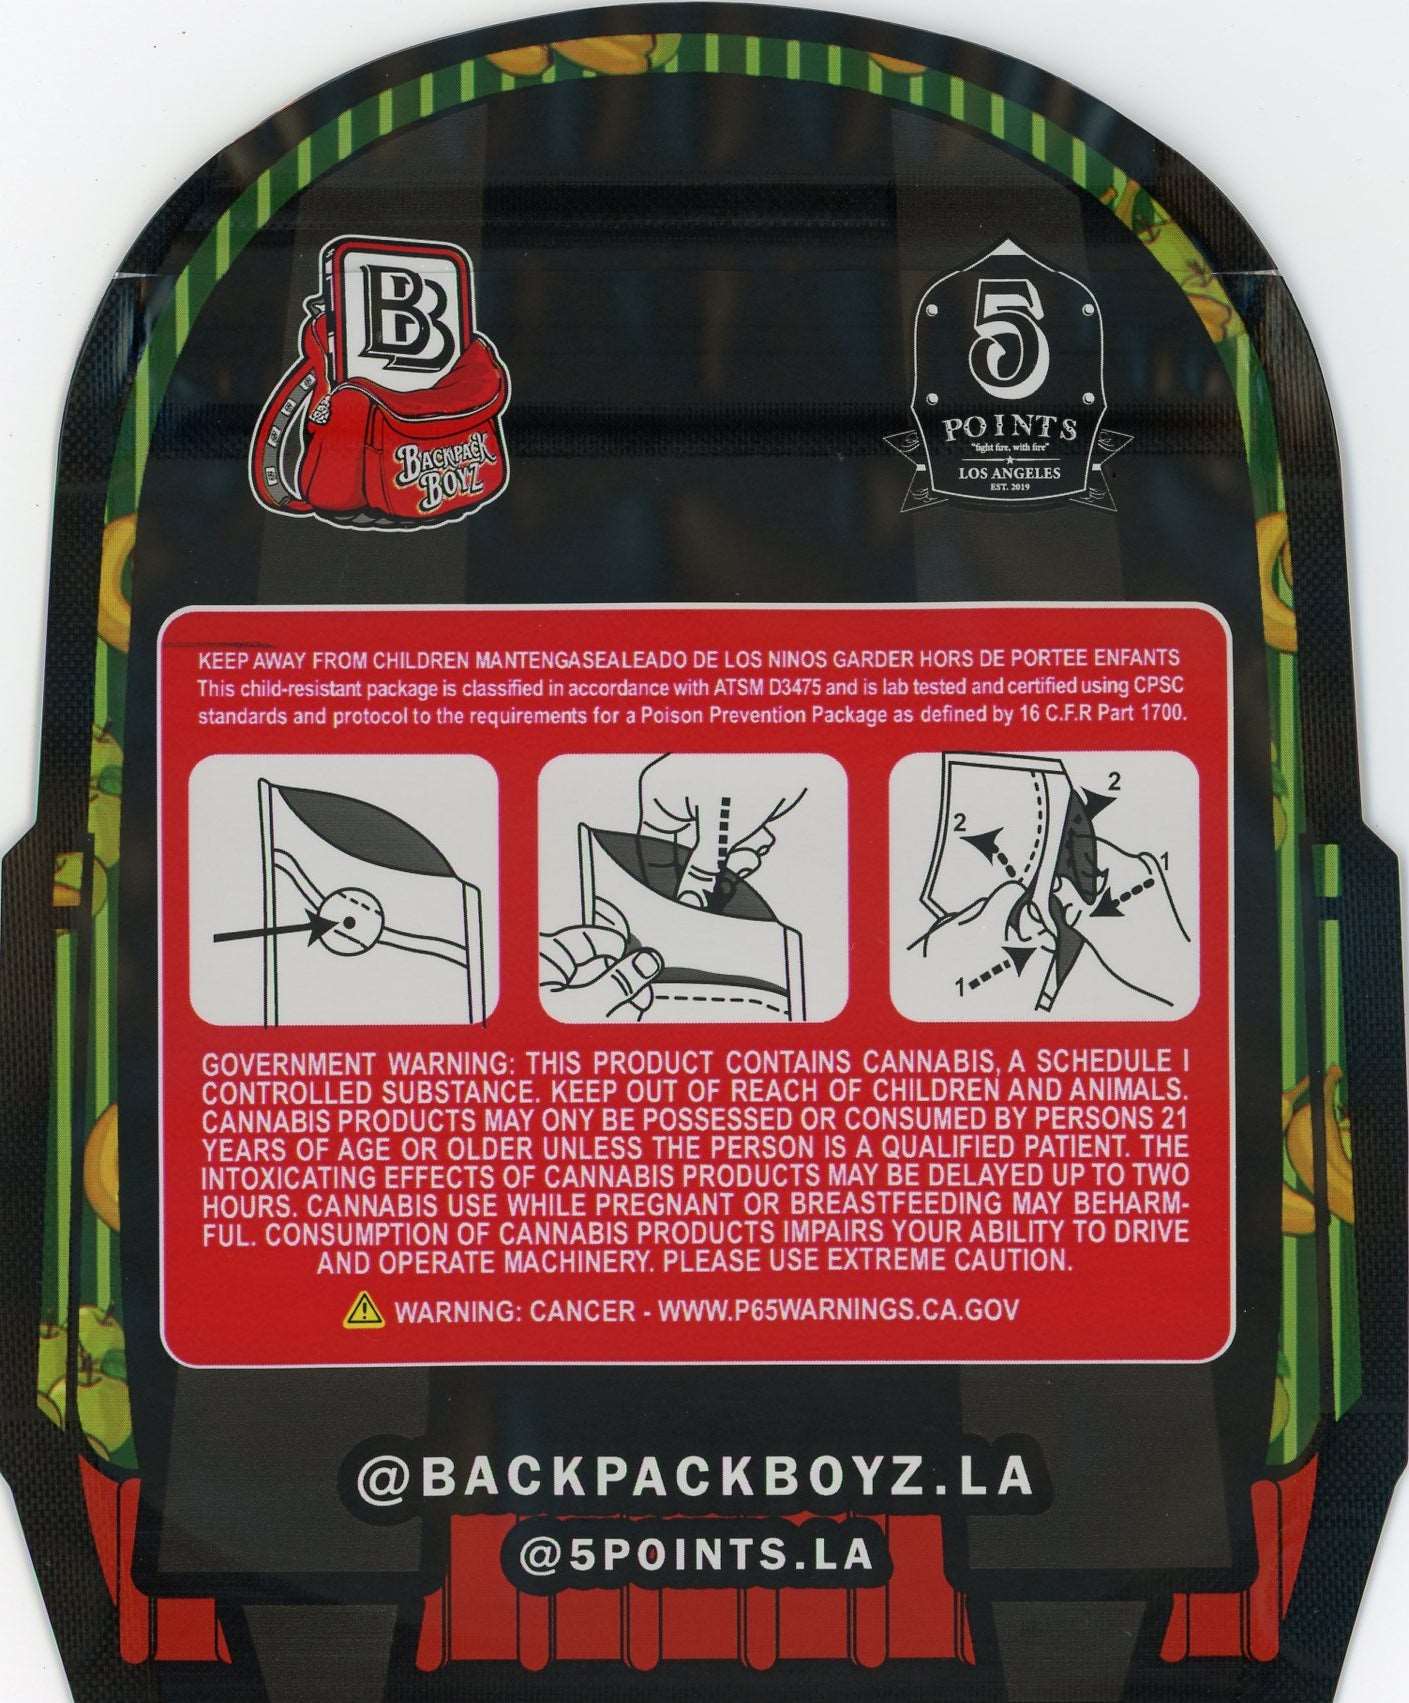 Backpack Boyz Mylar Bags 3.5g - Apples and Bananas